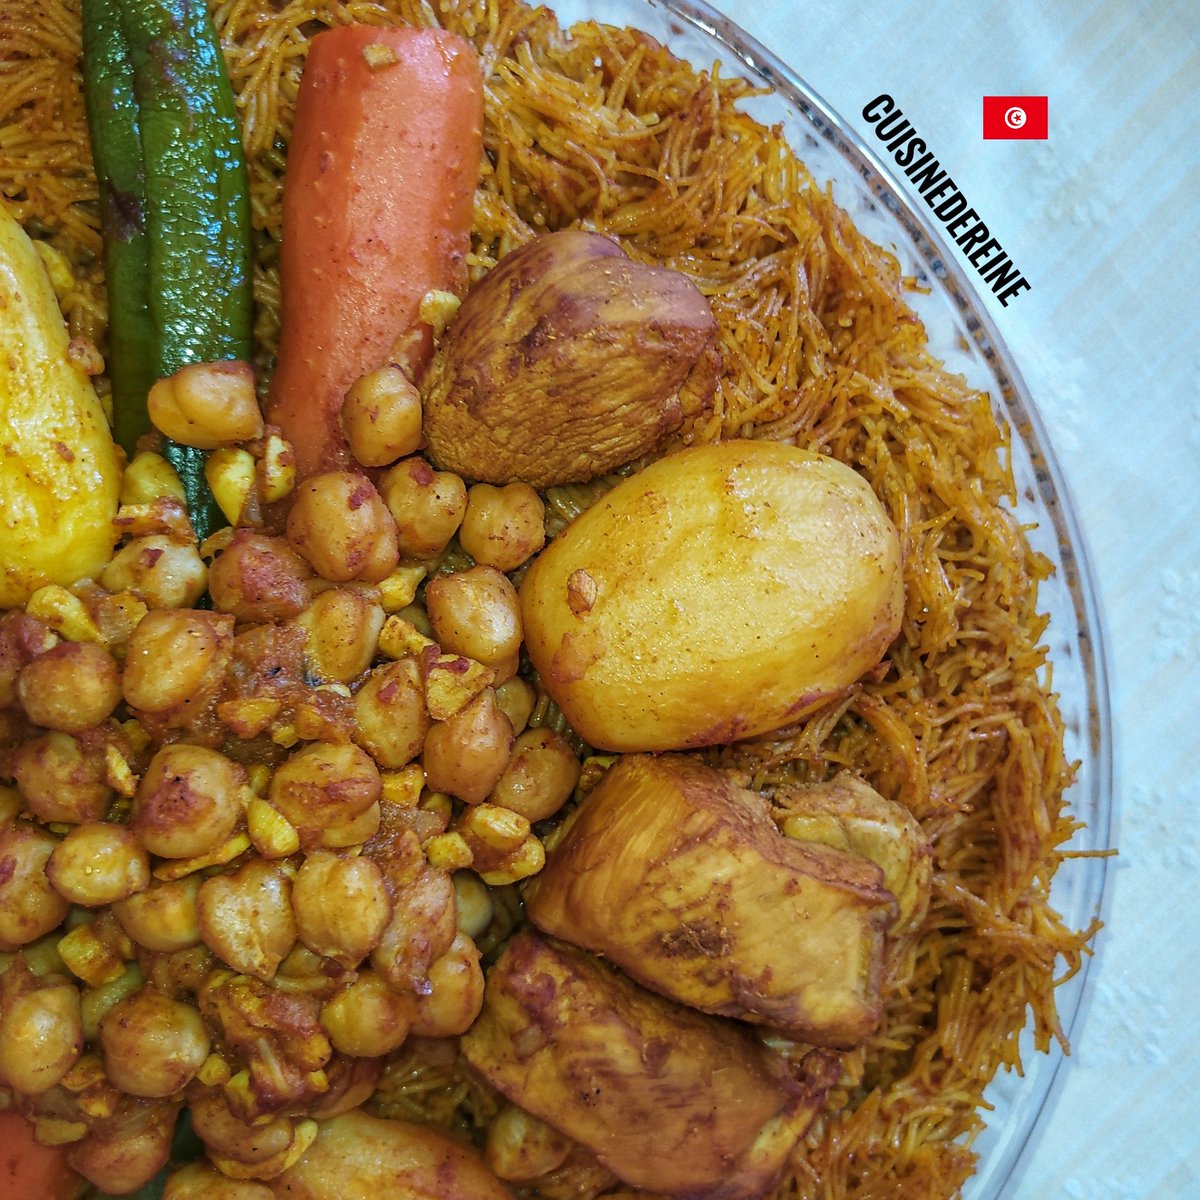 دويدة مفورة بالدجاج 🇹🇳 طريقة التحضير بالفيديو: youtu.be/Fj0wUtN0GaY?si… #Food #recipe #Tunisia